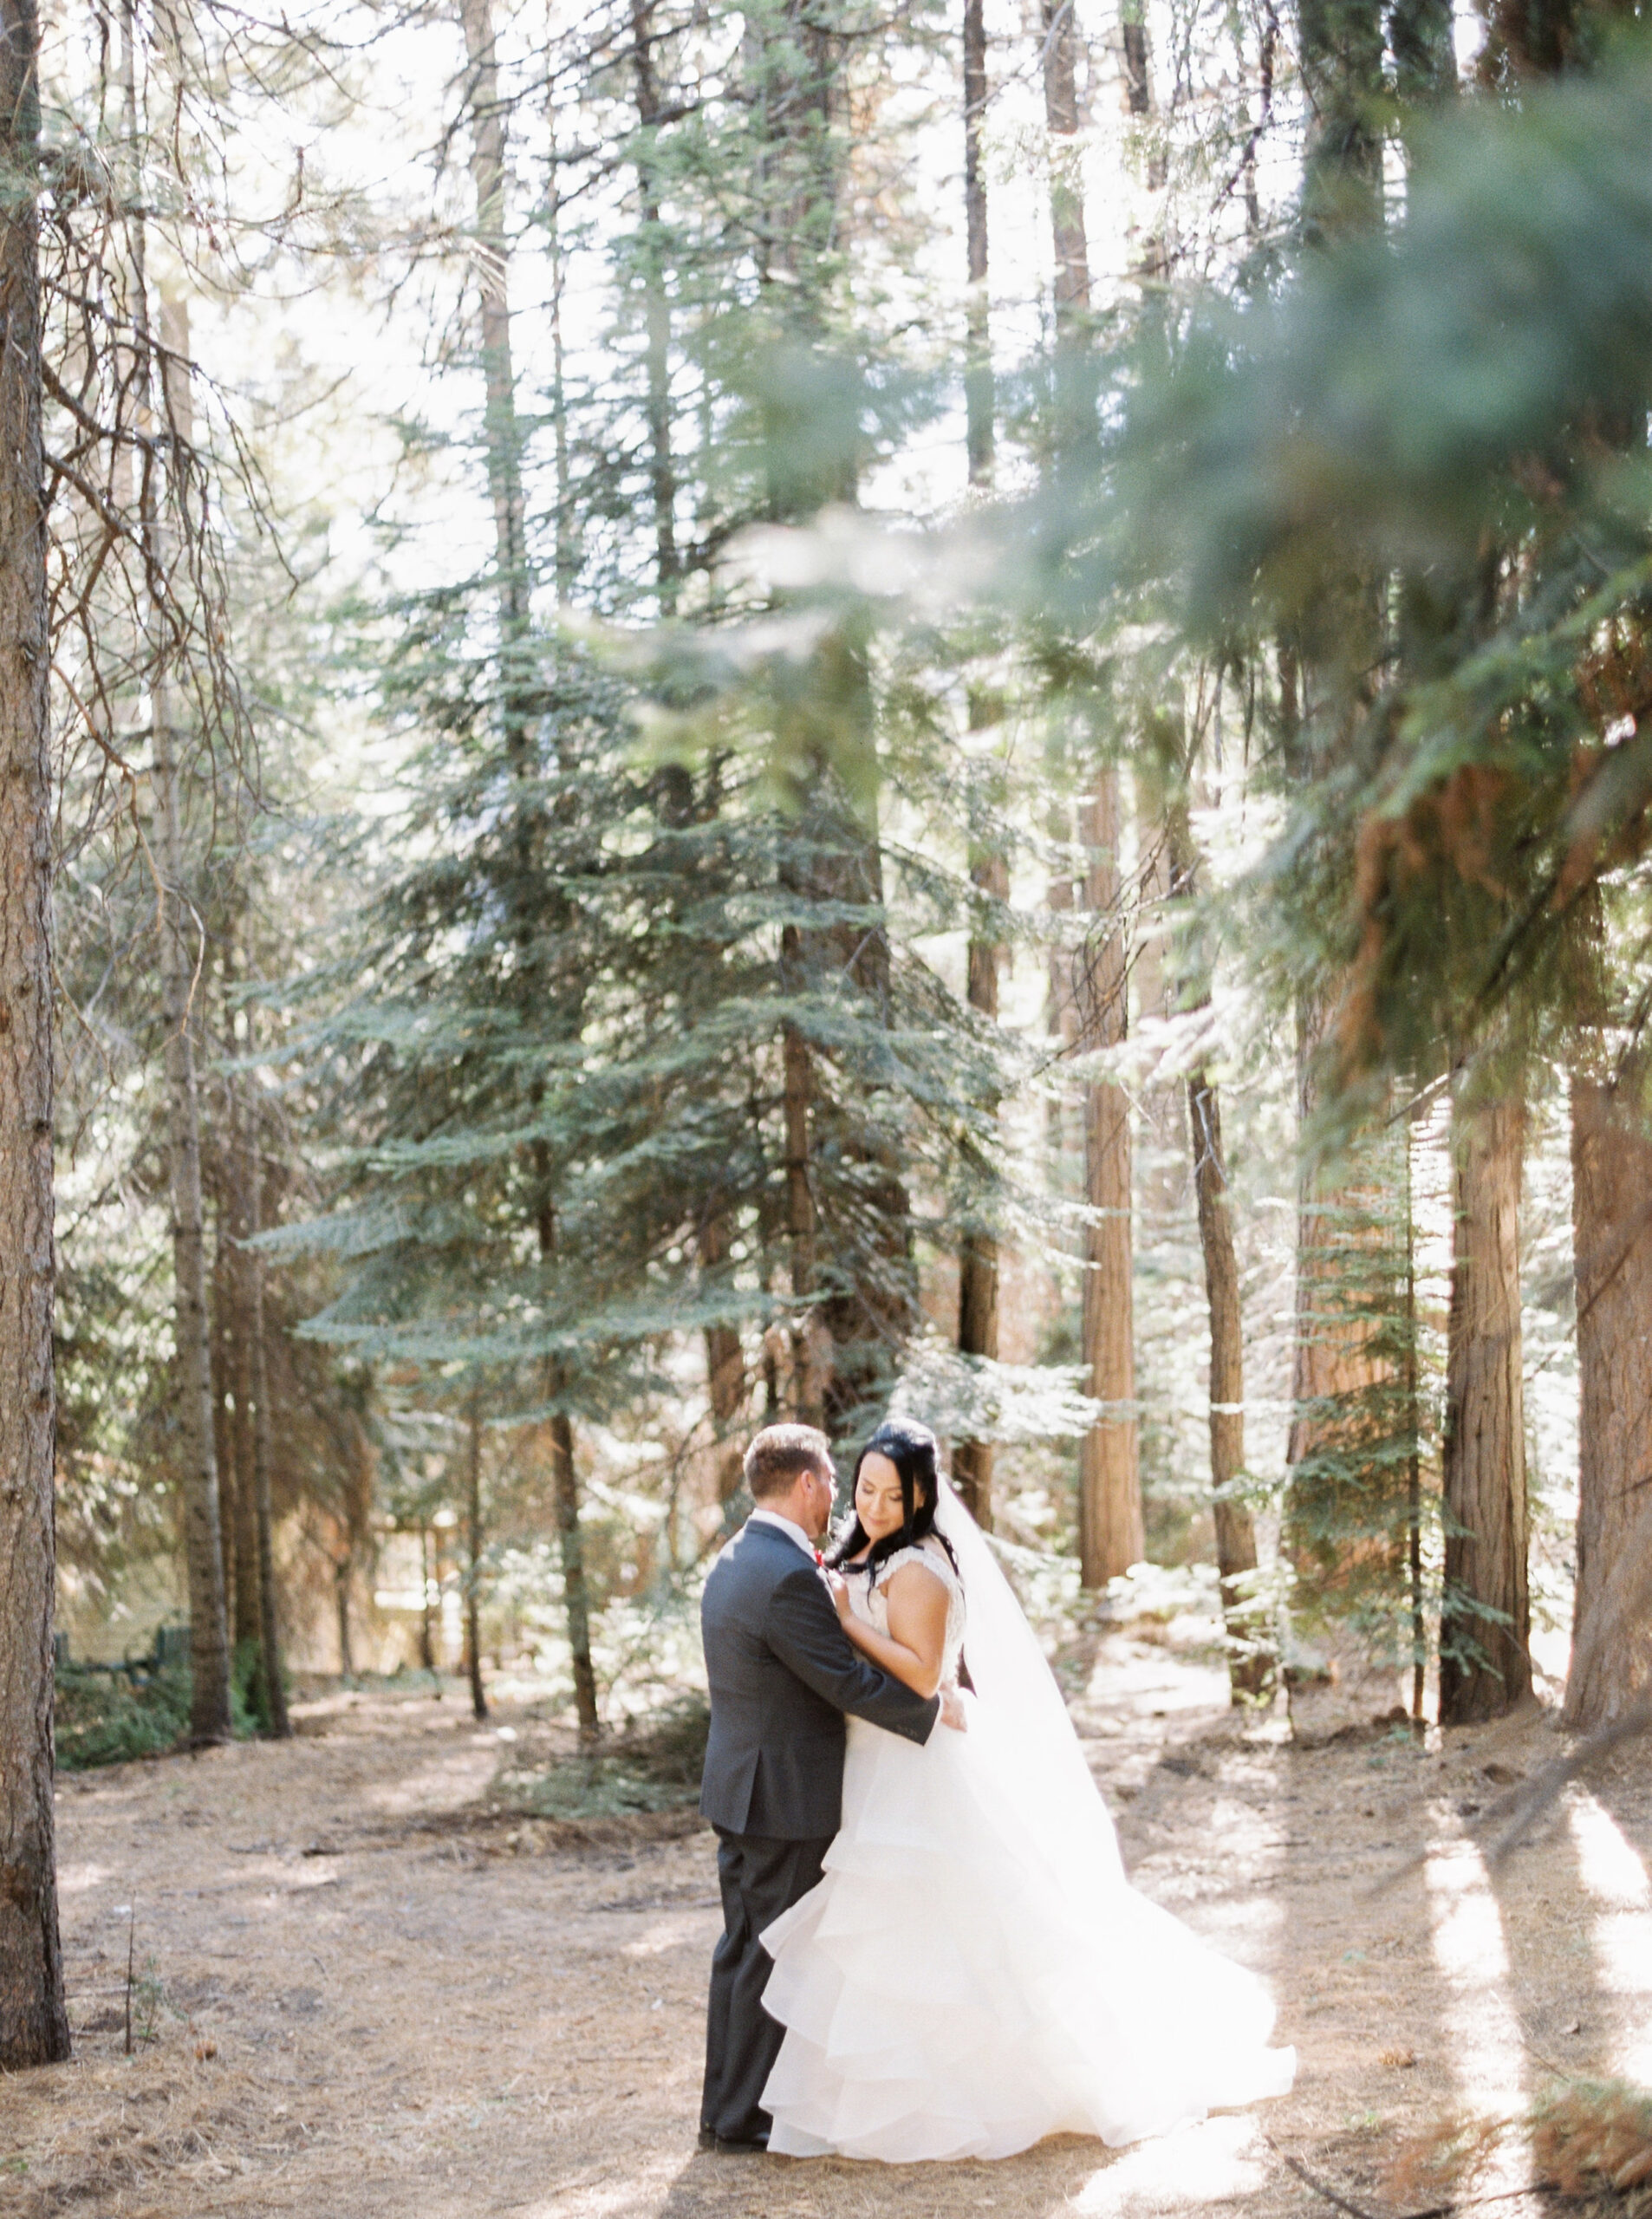 Tenaya-lodge-wedding-at-yosemite-national-park-california-1-3.jpg